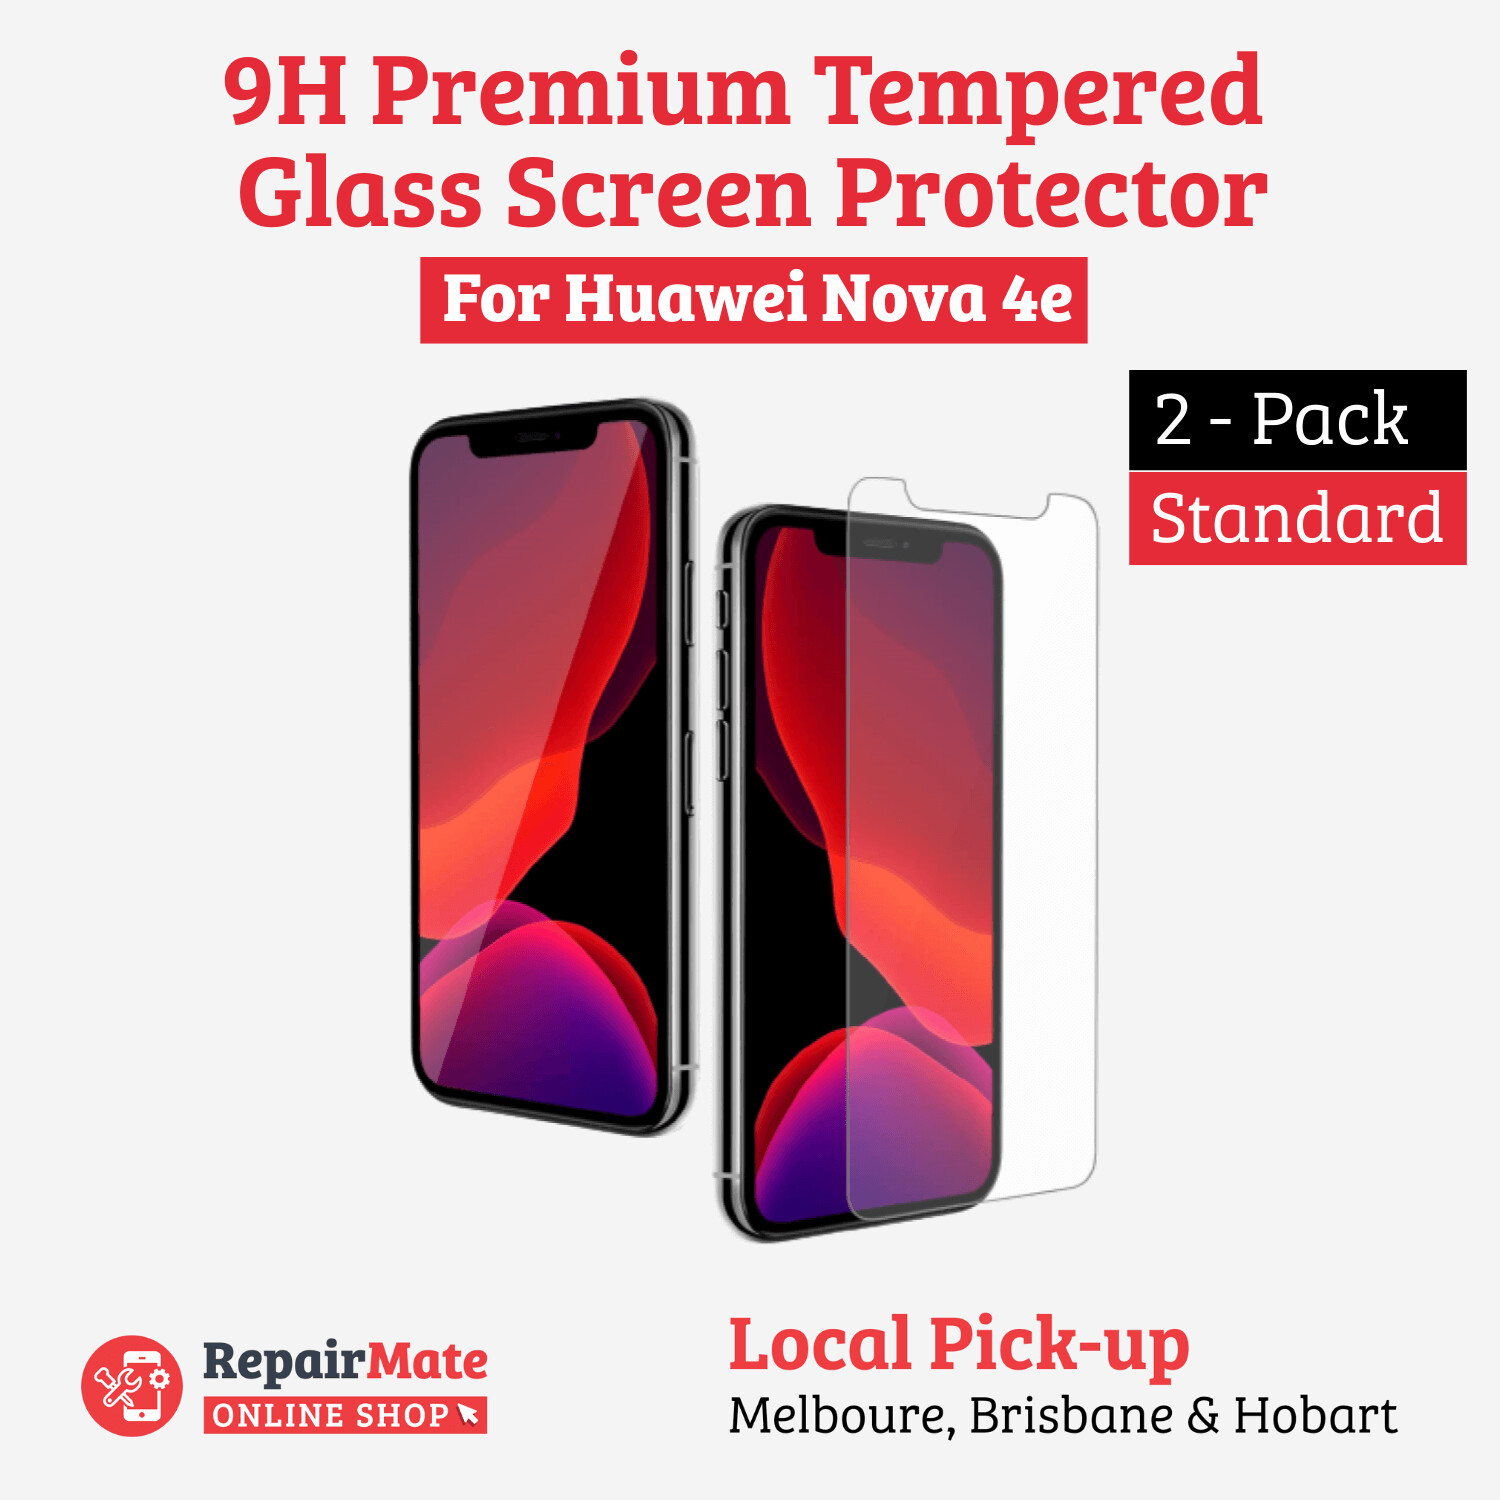 Huawei Nova 4e 9H Premium Tempered Glass Screen Protector [2 Pack]